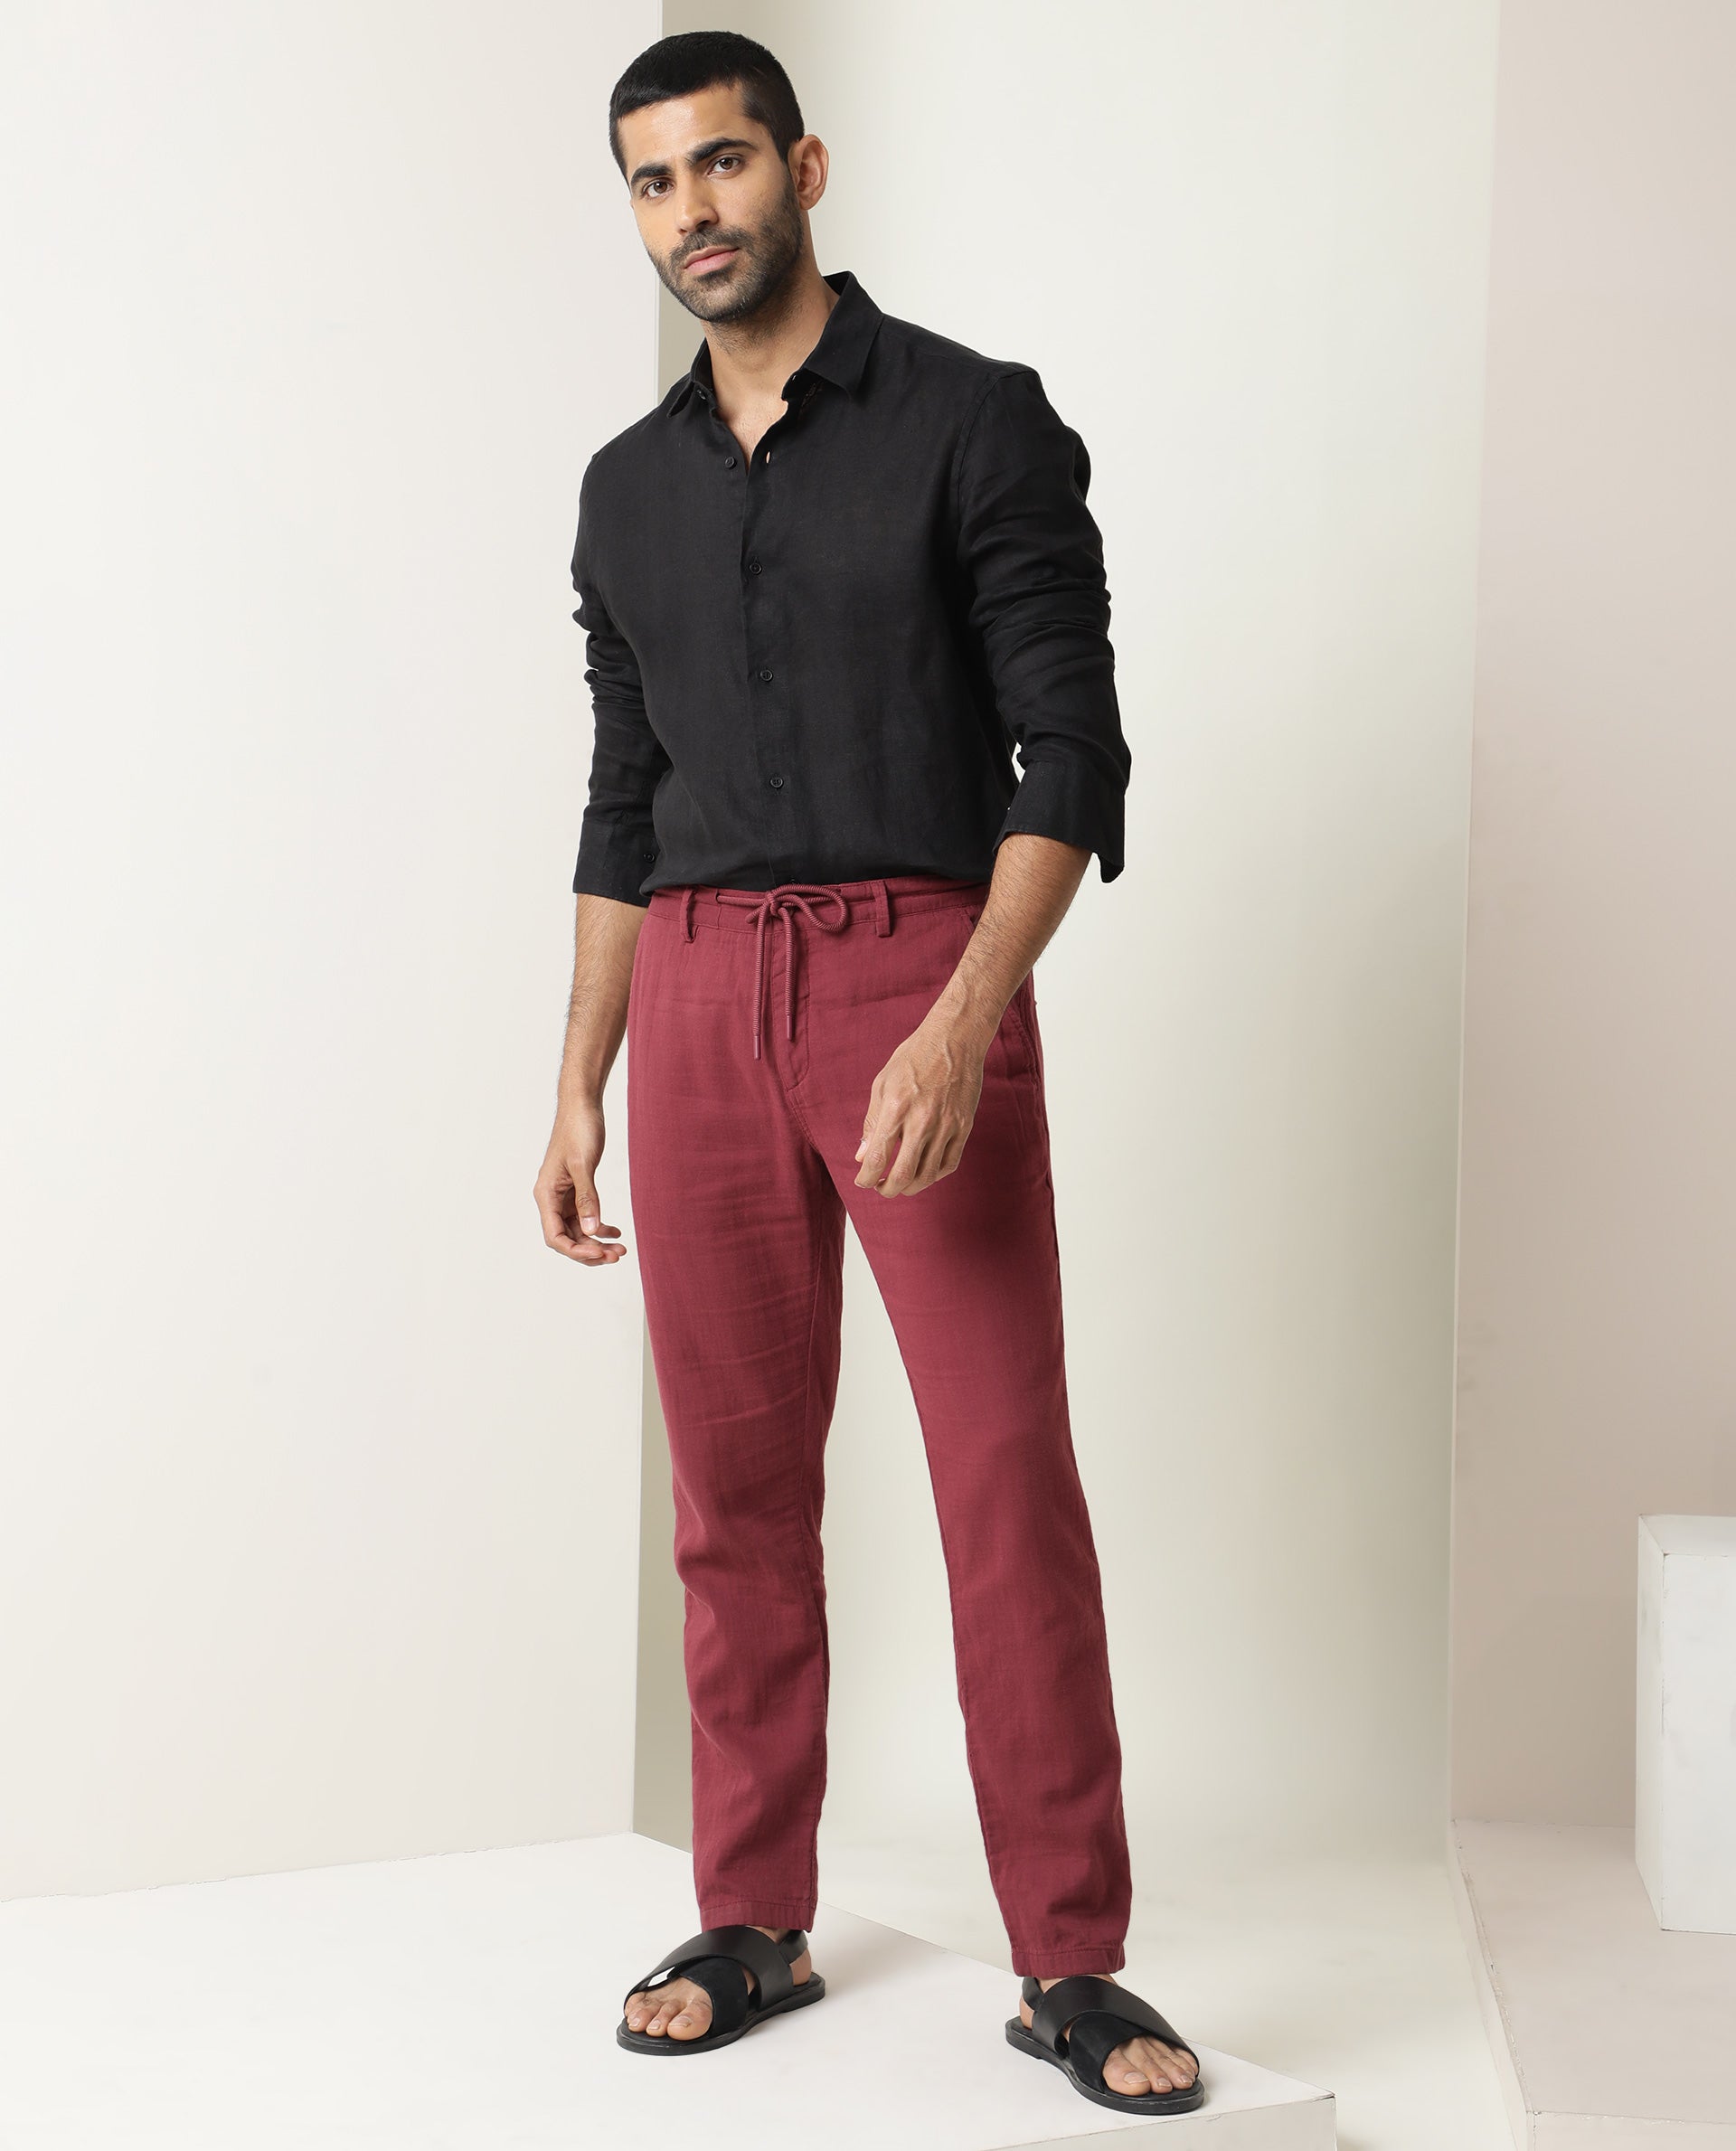 Maroon trousers & brown | Burgundy pants men, Mens fashion summer, Burgundy  pants outfit